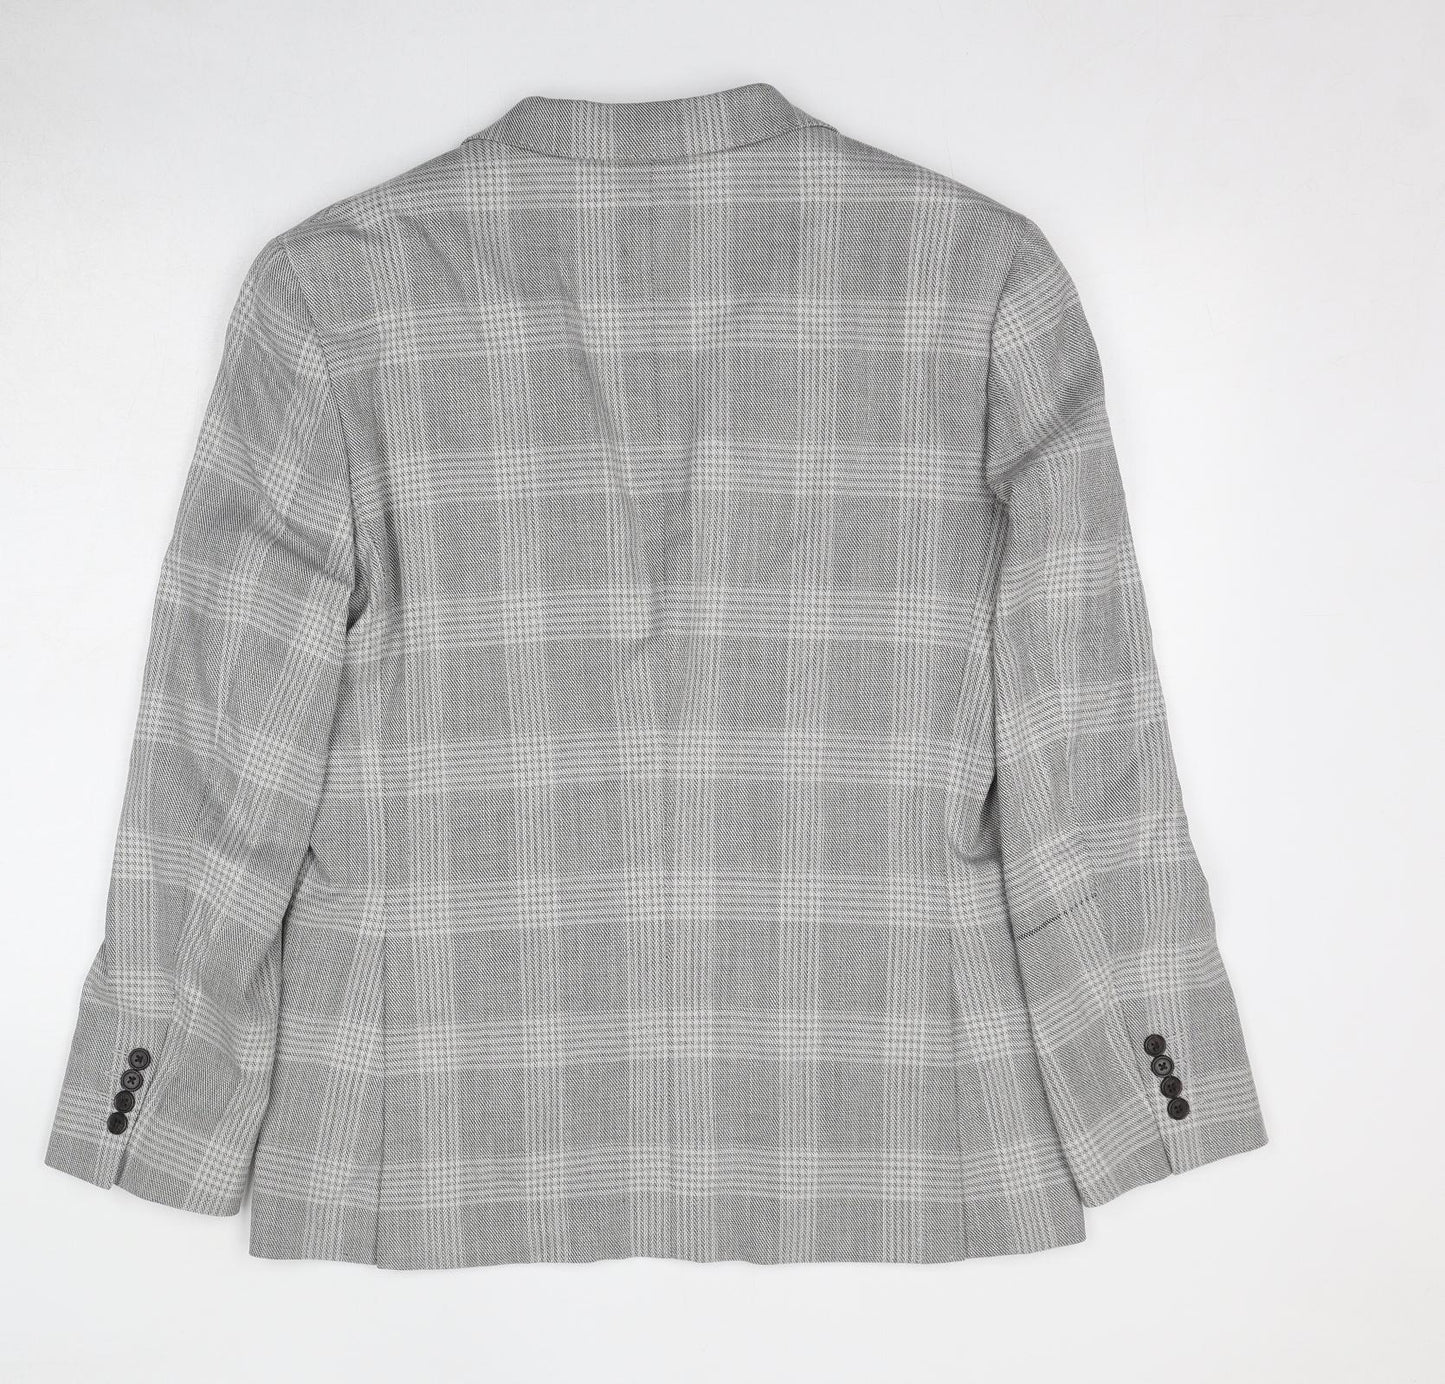 Marks and Spencer Mens Grey Check Polyester Jacket Suit Jacket Size 40 Regular